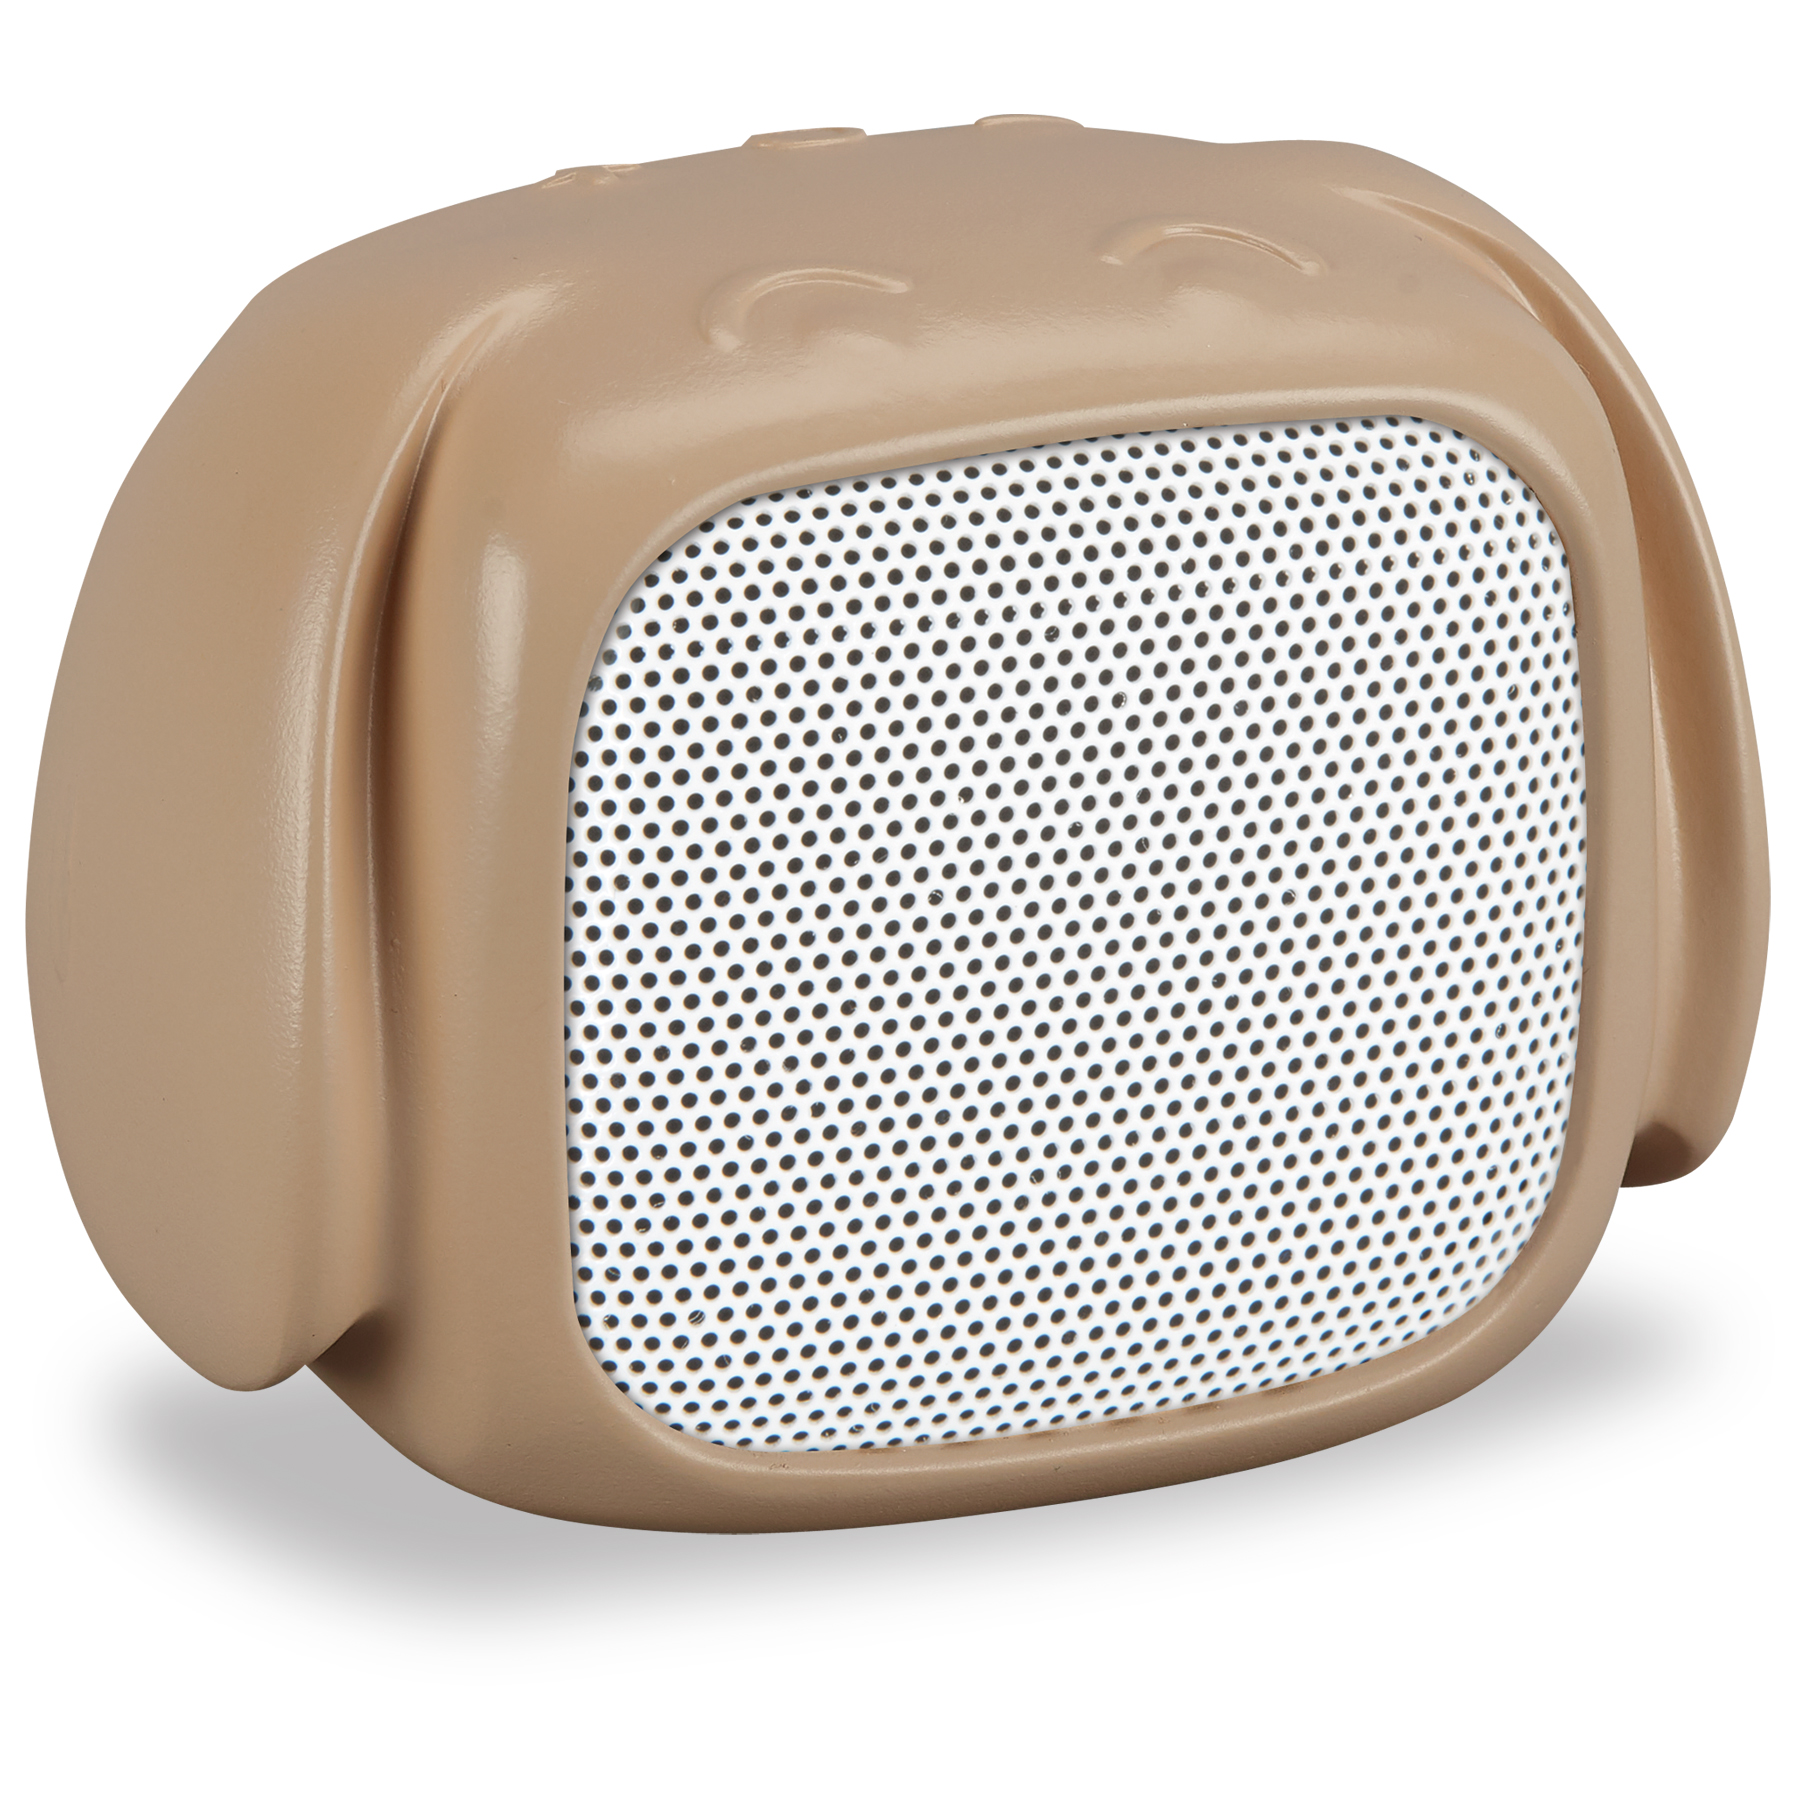 iLive Wild Tailz Wireless Dog Speaker, ISB19DOG - image 1 of 4